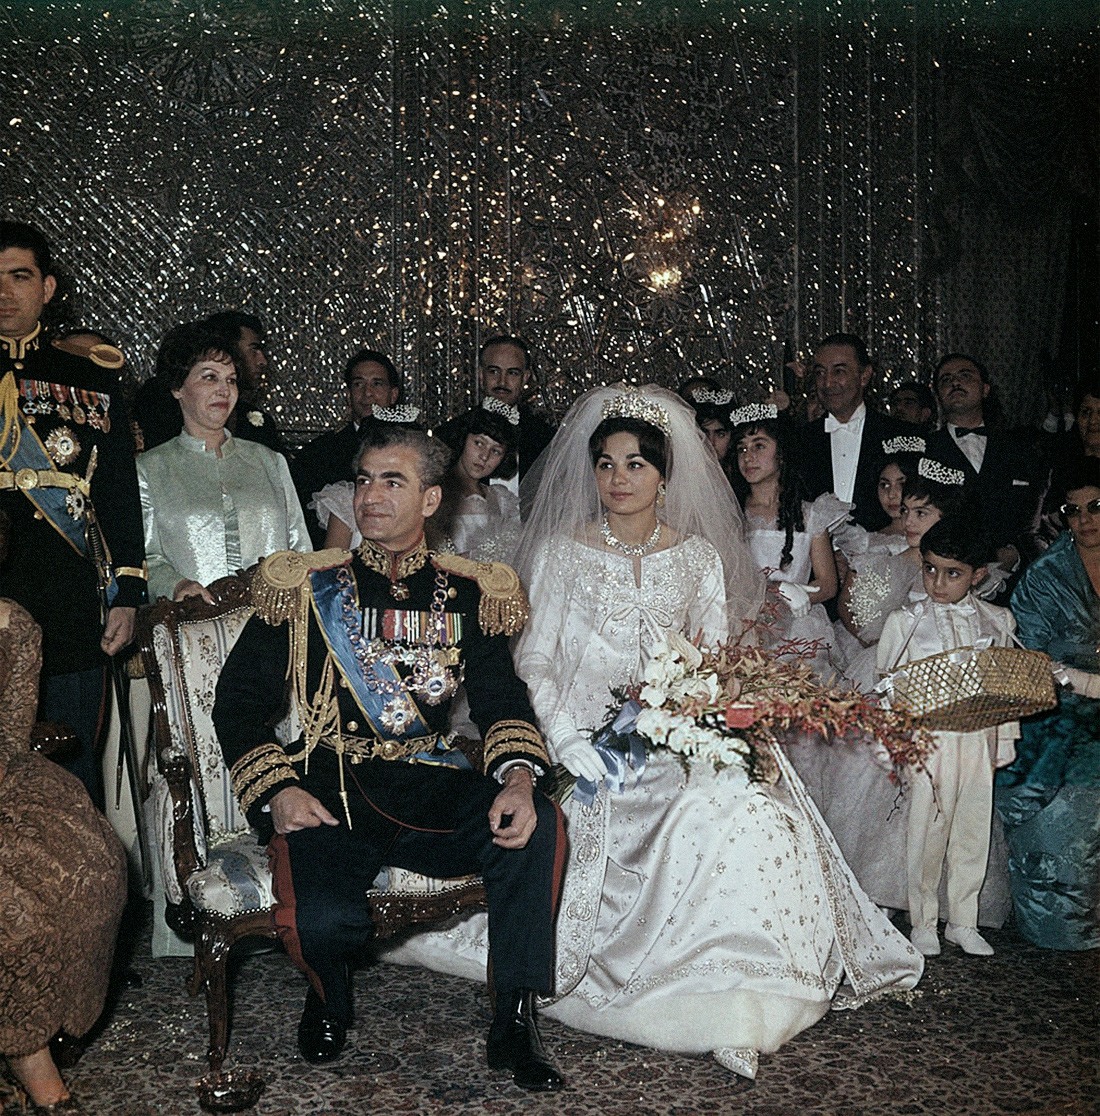 الشاه و(فرح بهلوي) في حفل زفافهما في ديسمبر سنة 1959. صورة: Mario De Biasi/Mondadori Portfolio/Getty Images